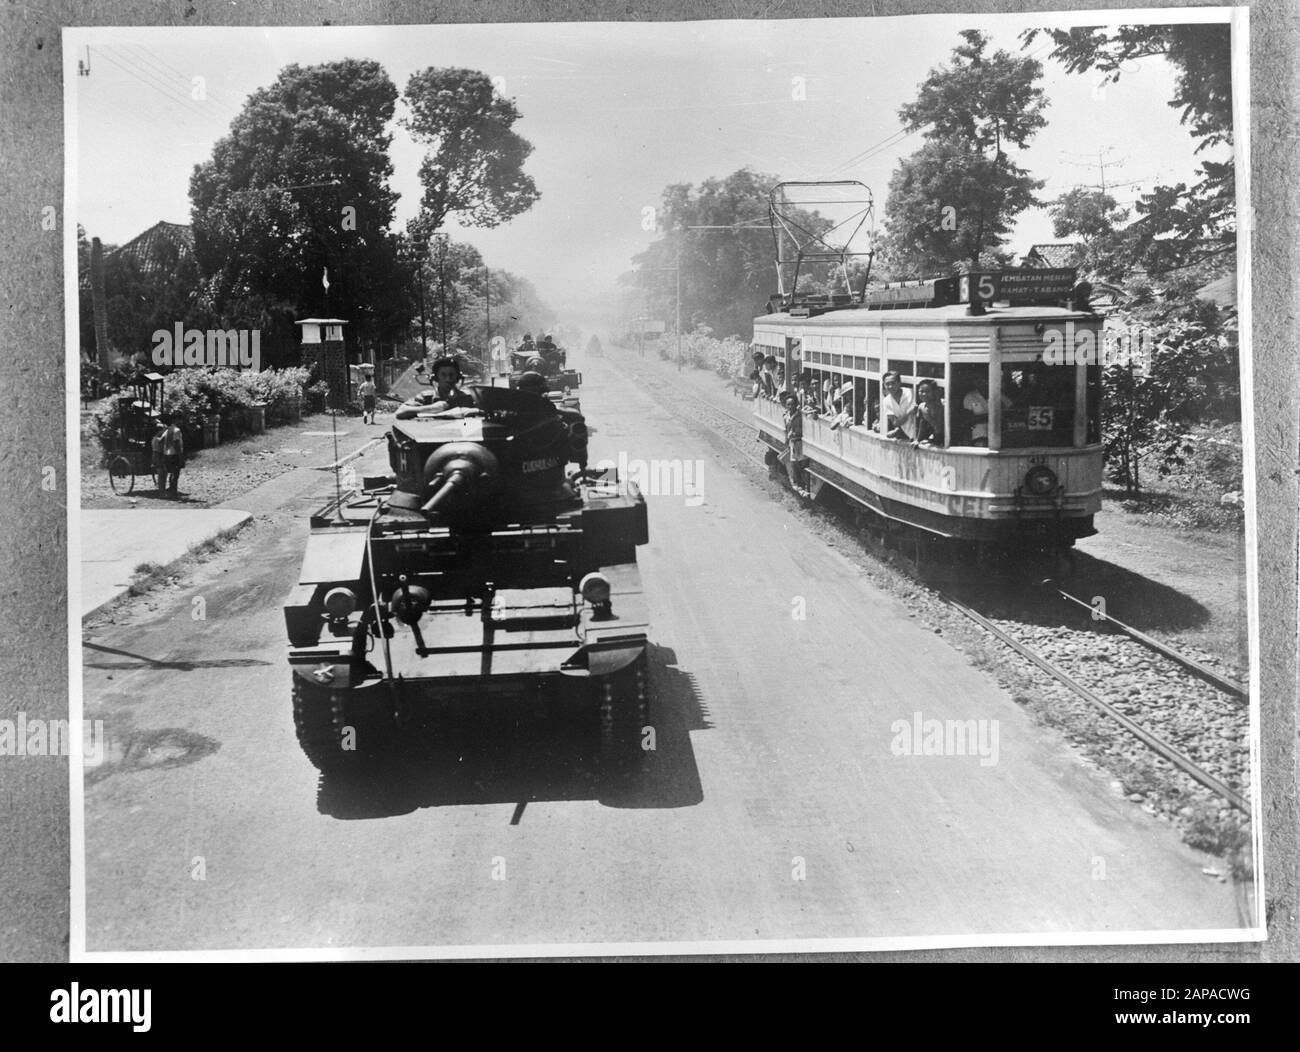 Batavia. Entry British troops with Stuart tanks. On the right a tram line 5 (Jembatan Merah/Ramat - Tanah Abang) Date: September 1945 Location: Batavia, Indonesia, Jakarta, Dutch East Indies Keywords: military, tanks, World War II Stock Photo